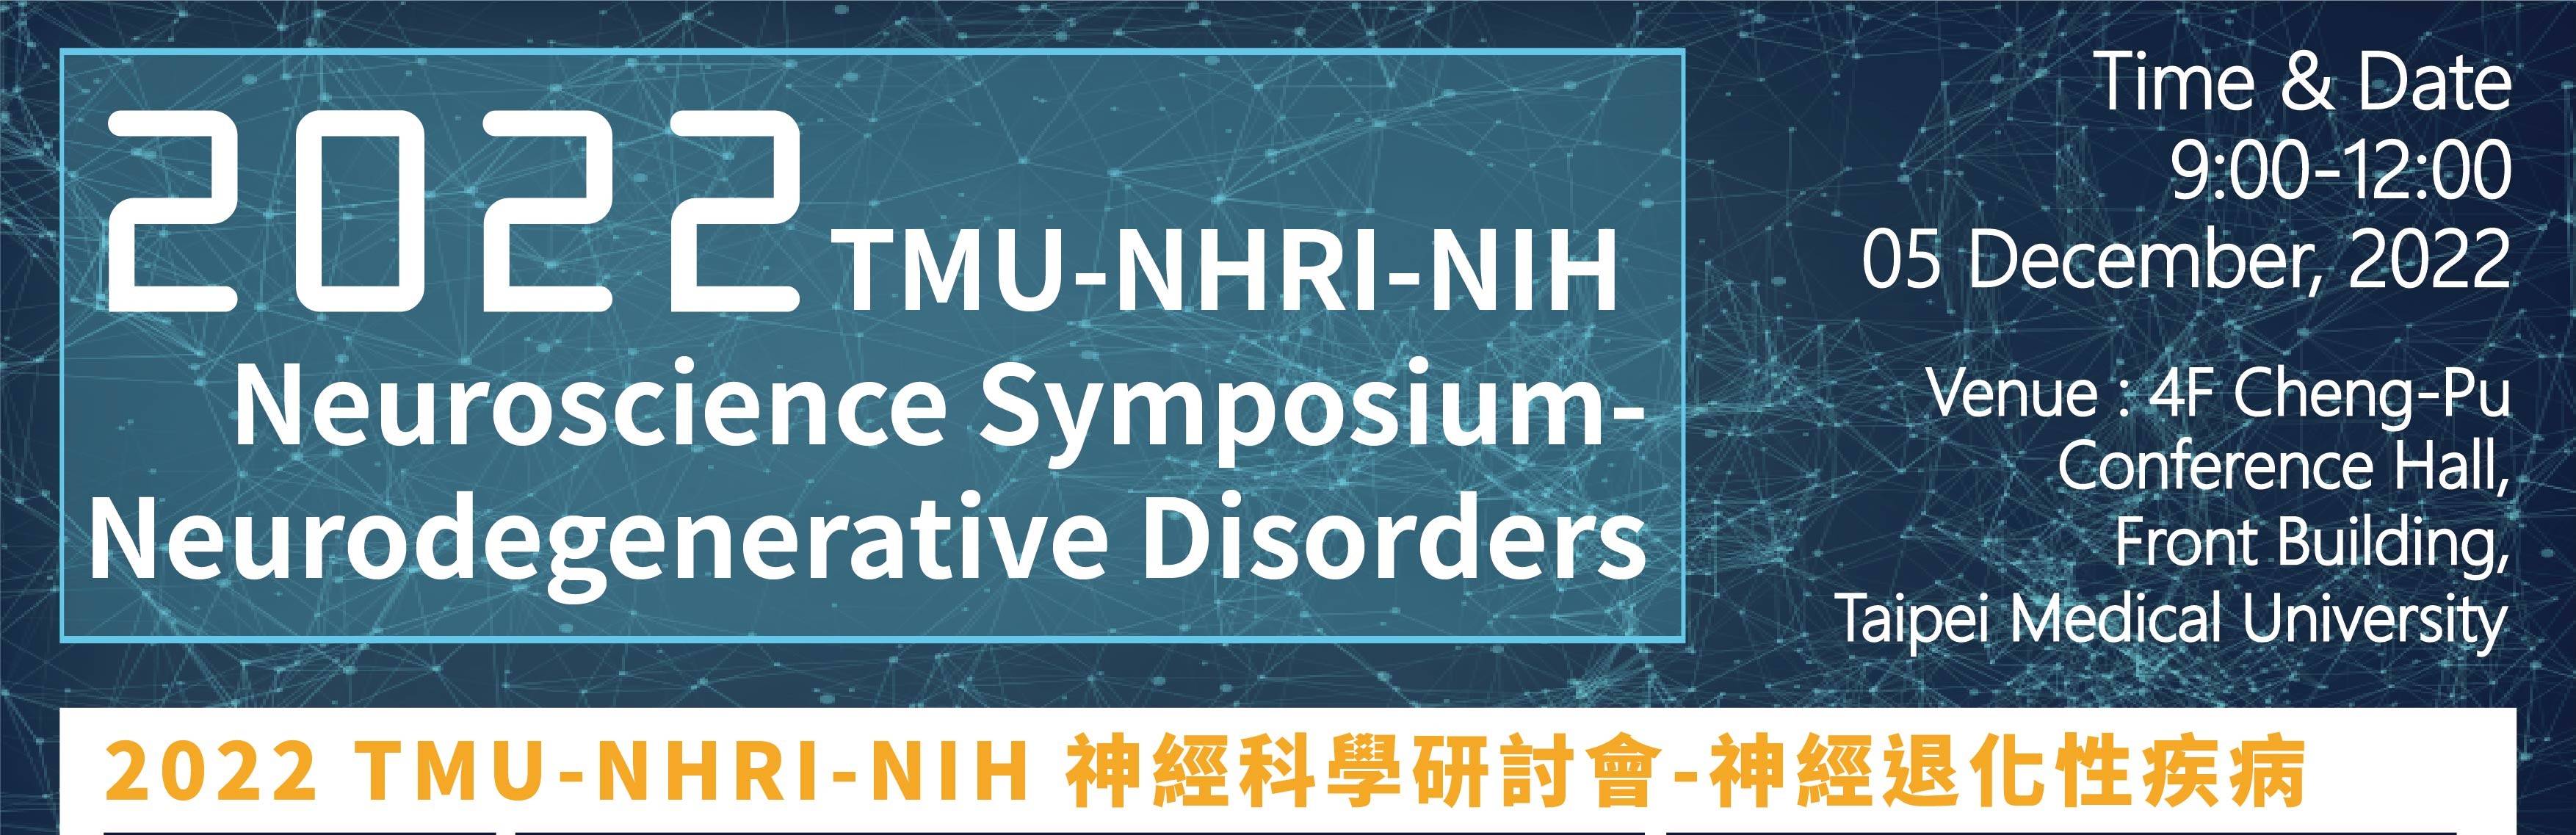 2022 TMU-NHRI-NIH Neuroscience Symposium-Neurodegenerative Disorders